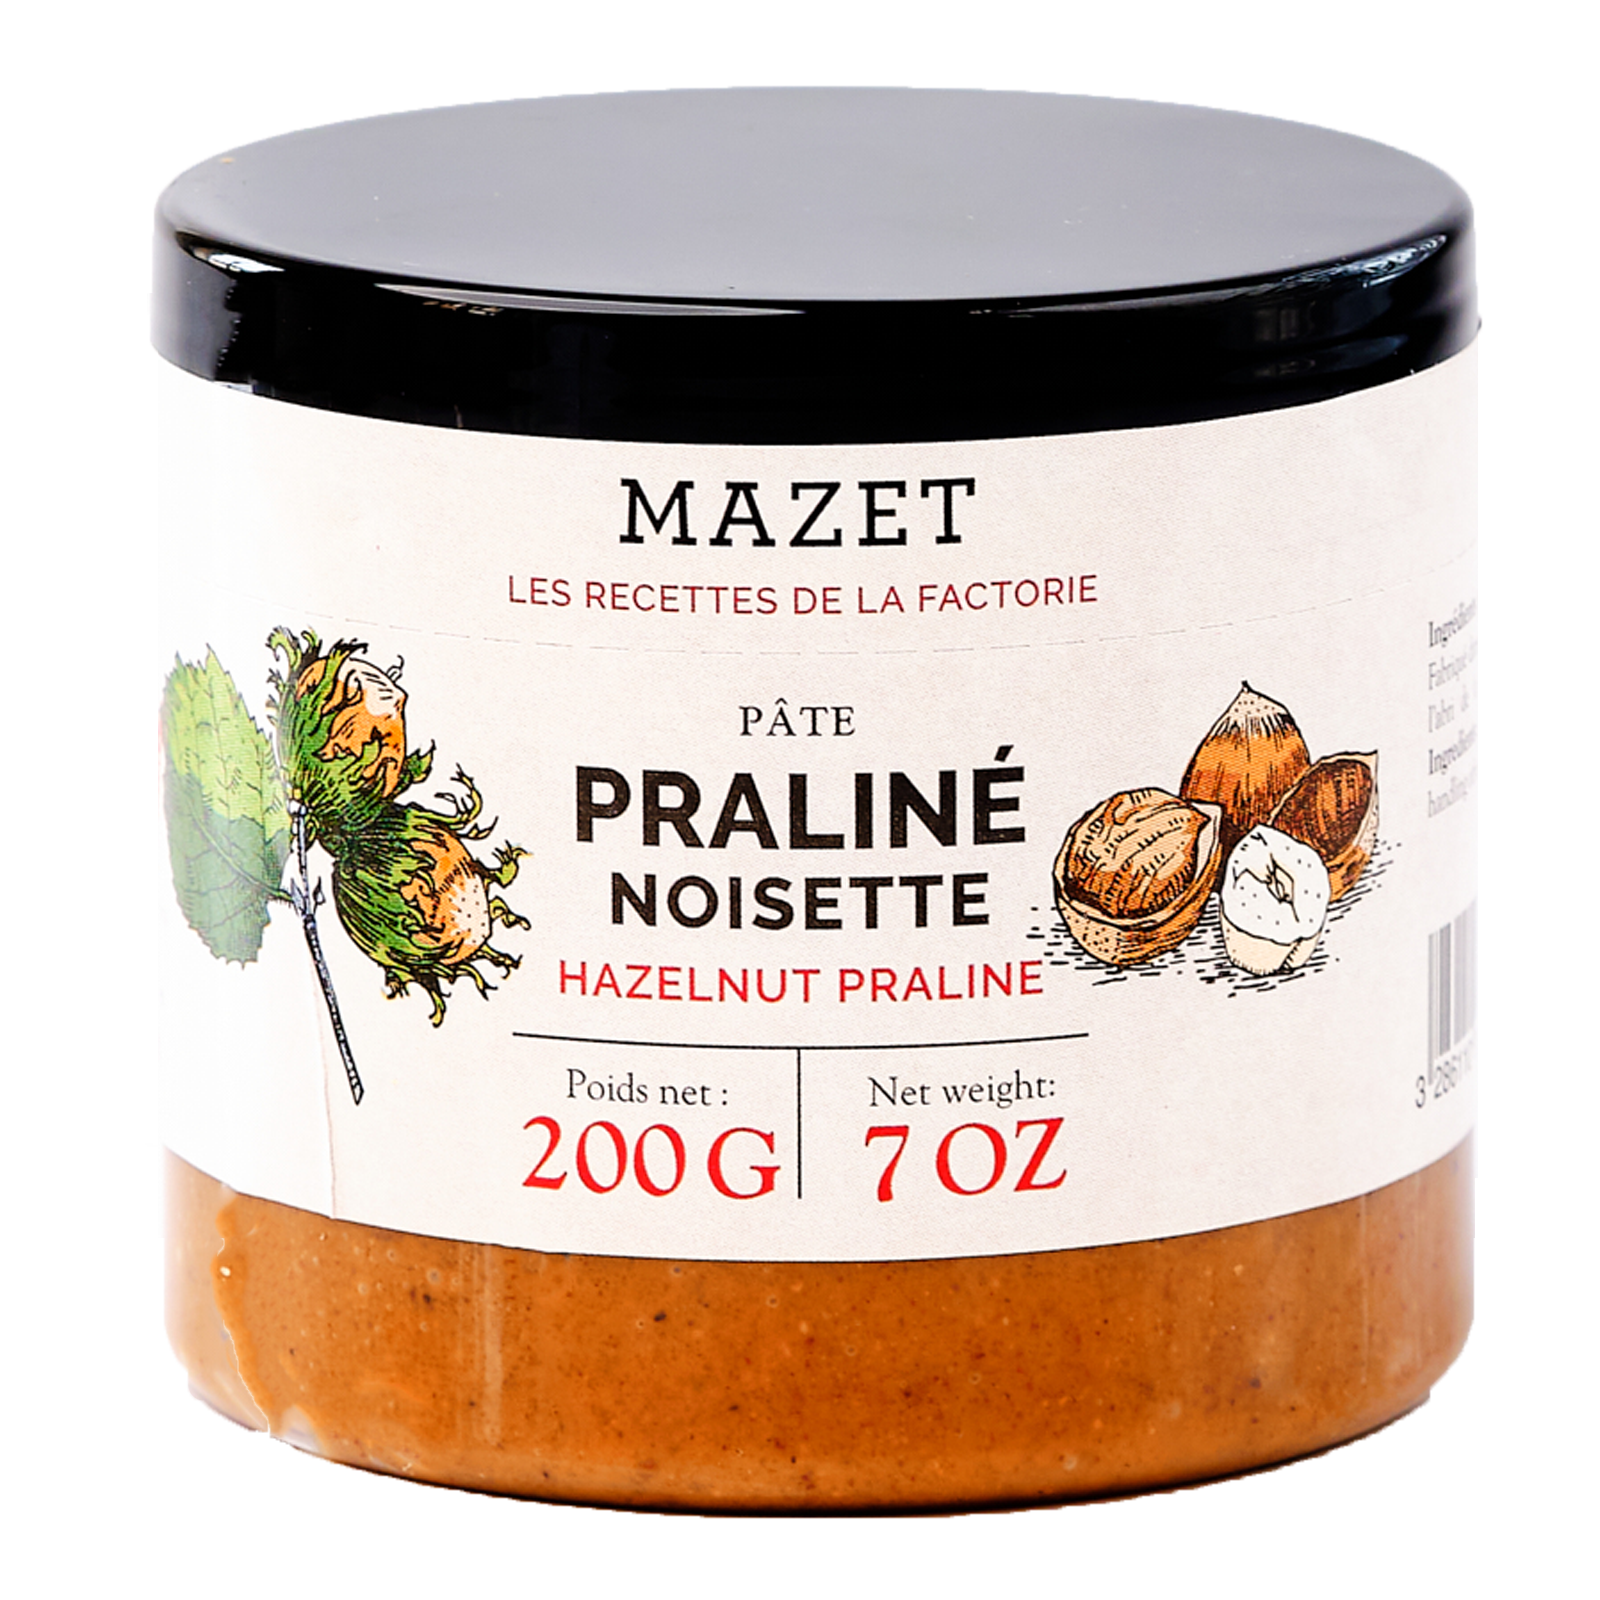 https://www.mazetconfiseur.com/225/ingredients-pate-praline-noisette-200g.jpg